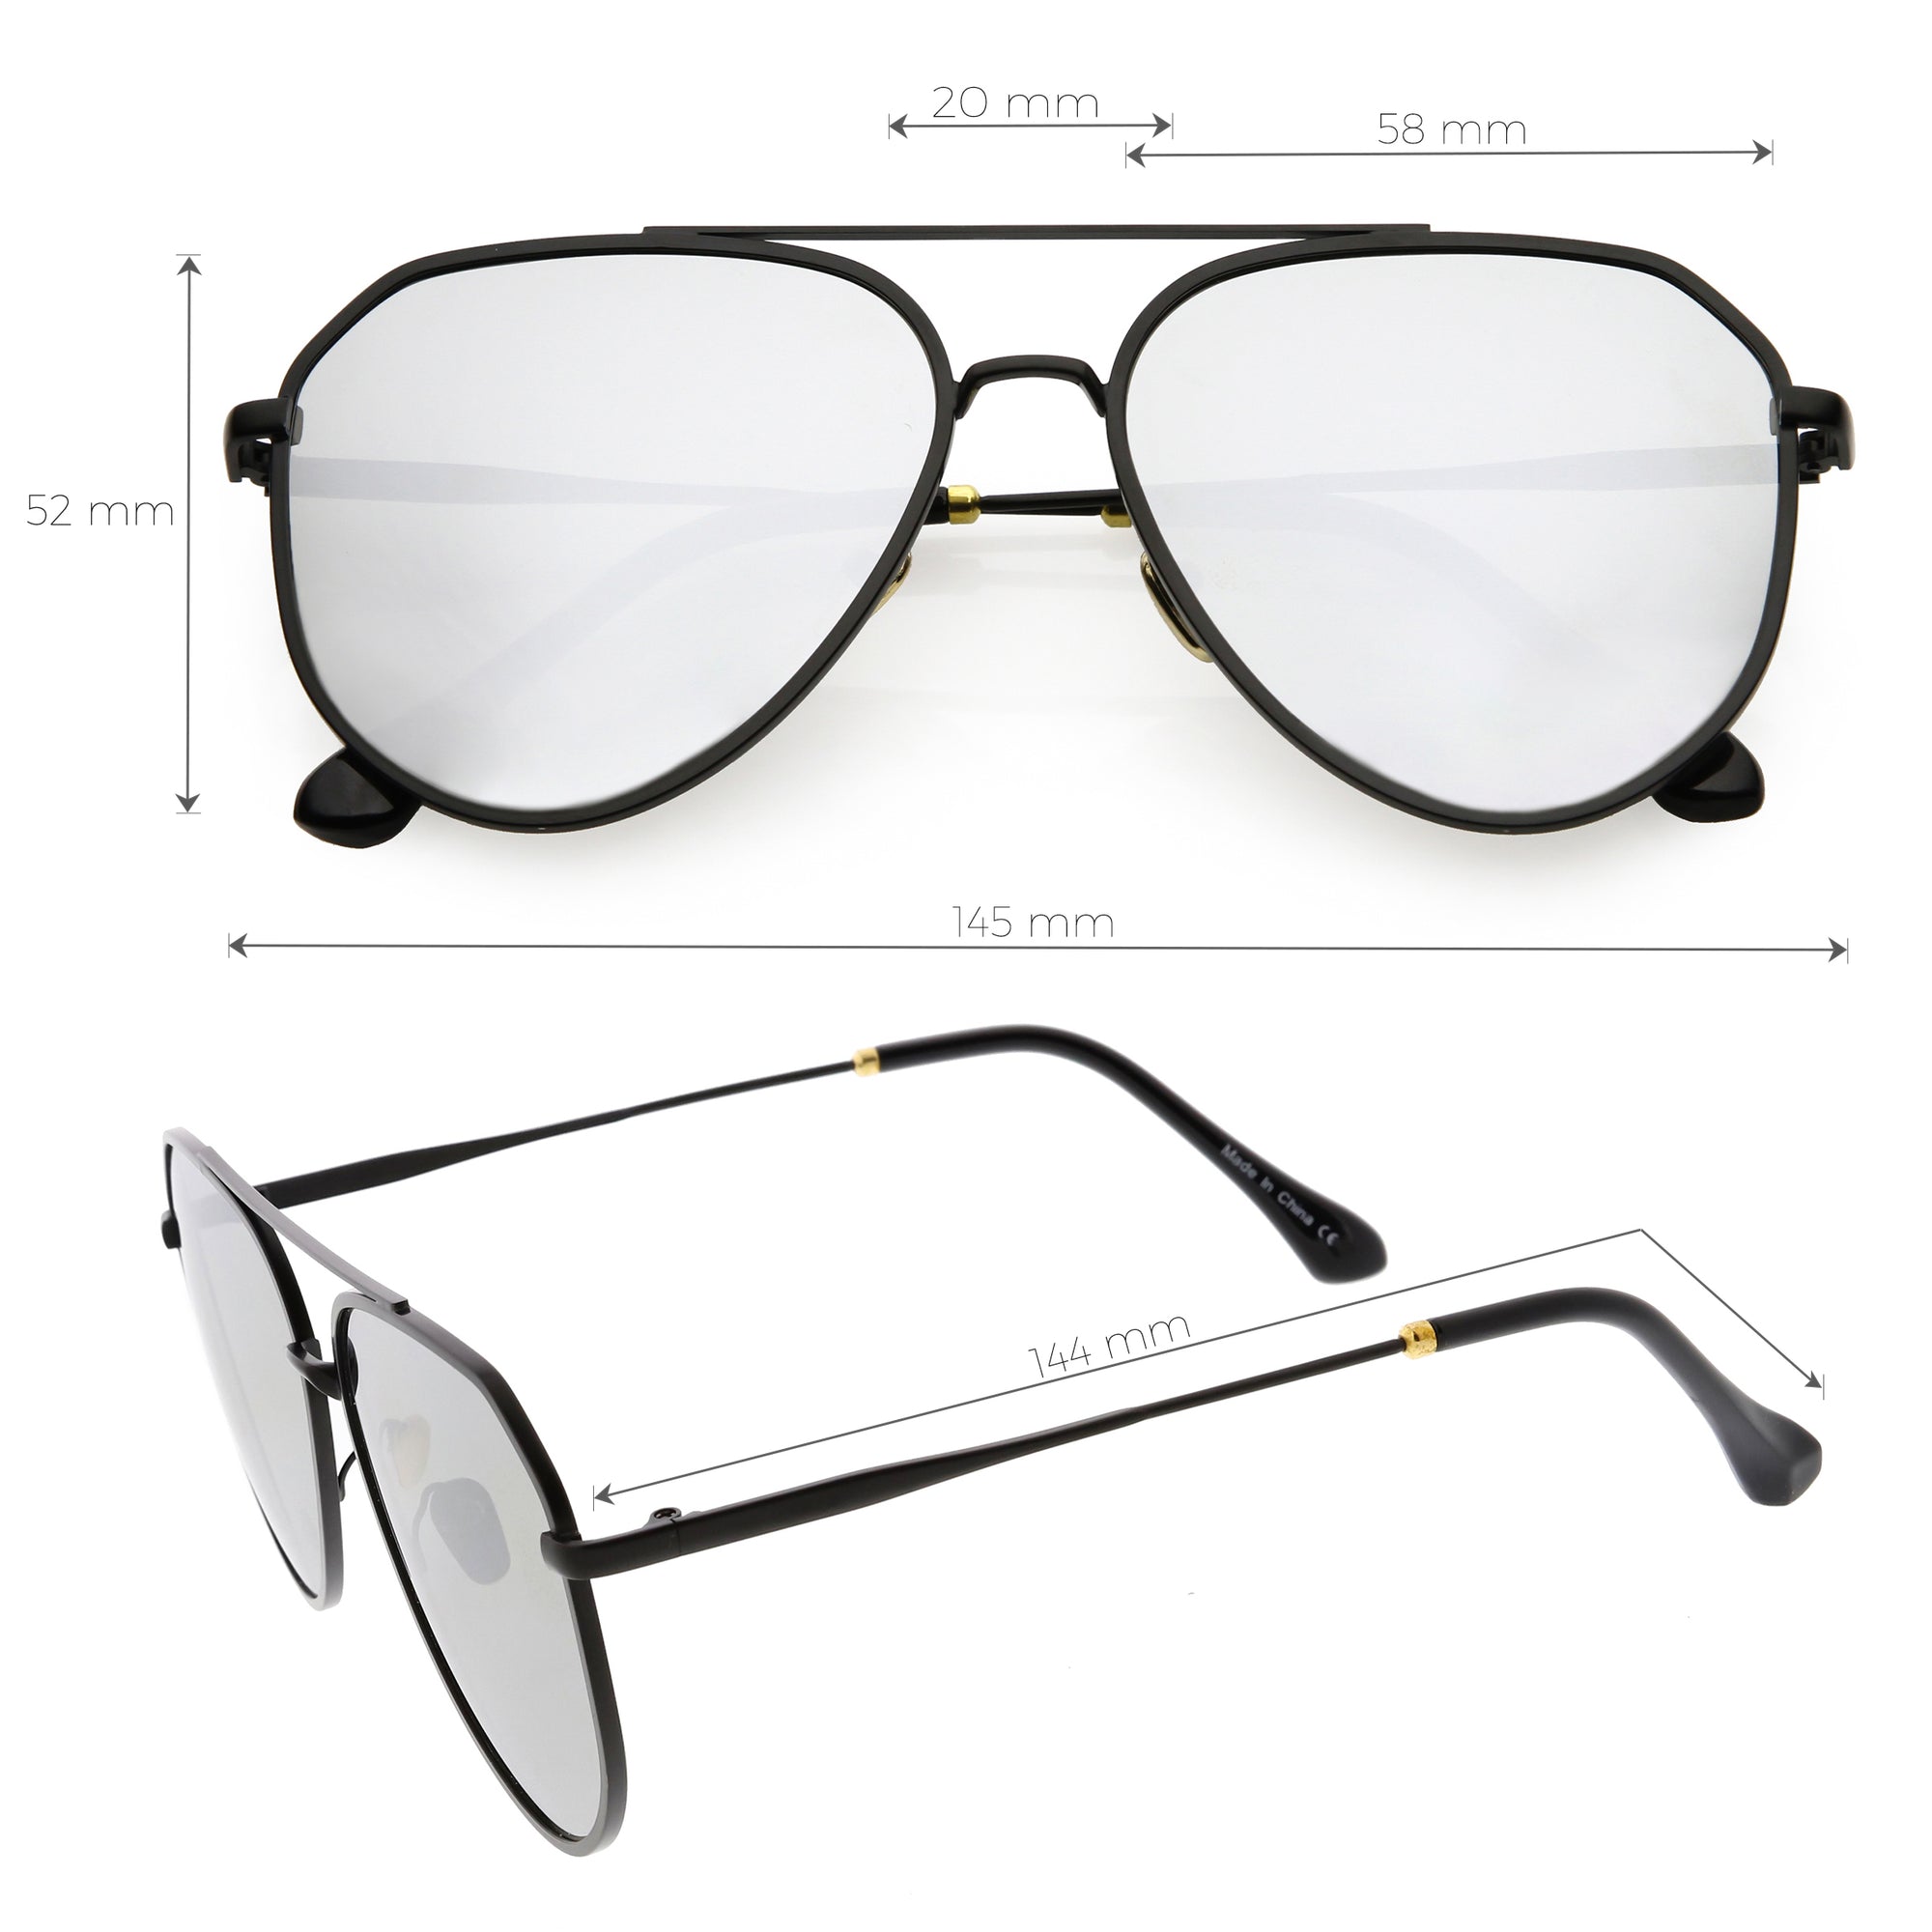 flat lens mirrored sunglasses